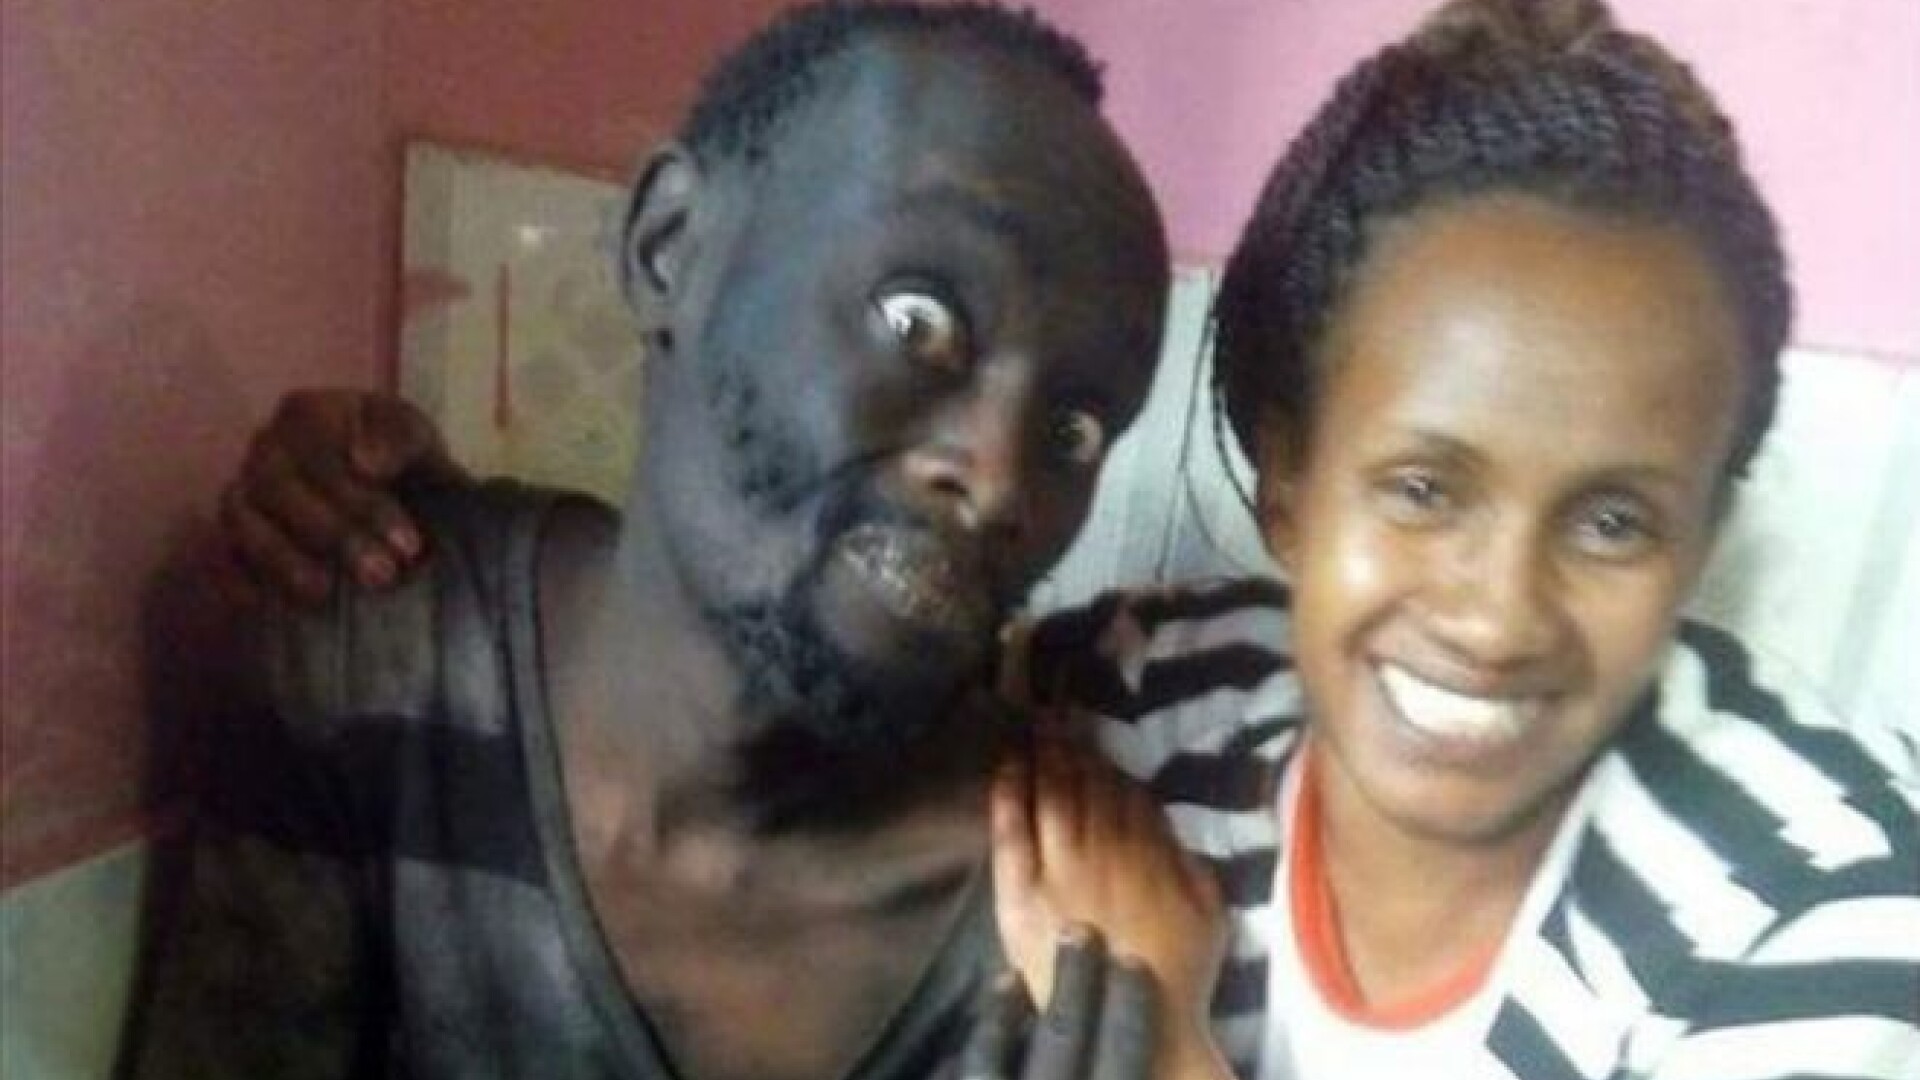 kenya, om al strazii, depedenta de droguri, Wanja Mwaura